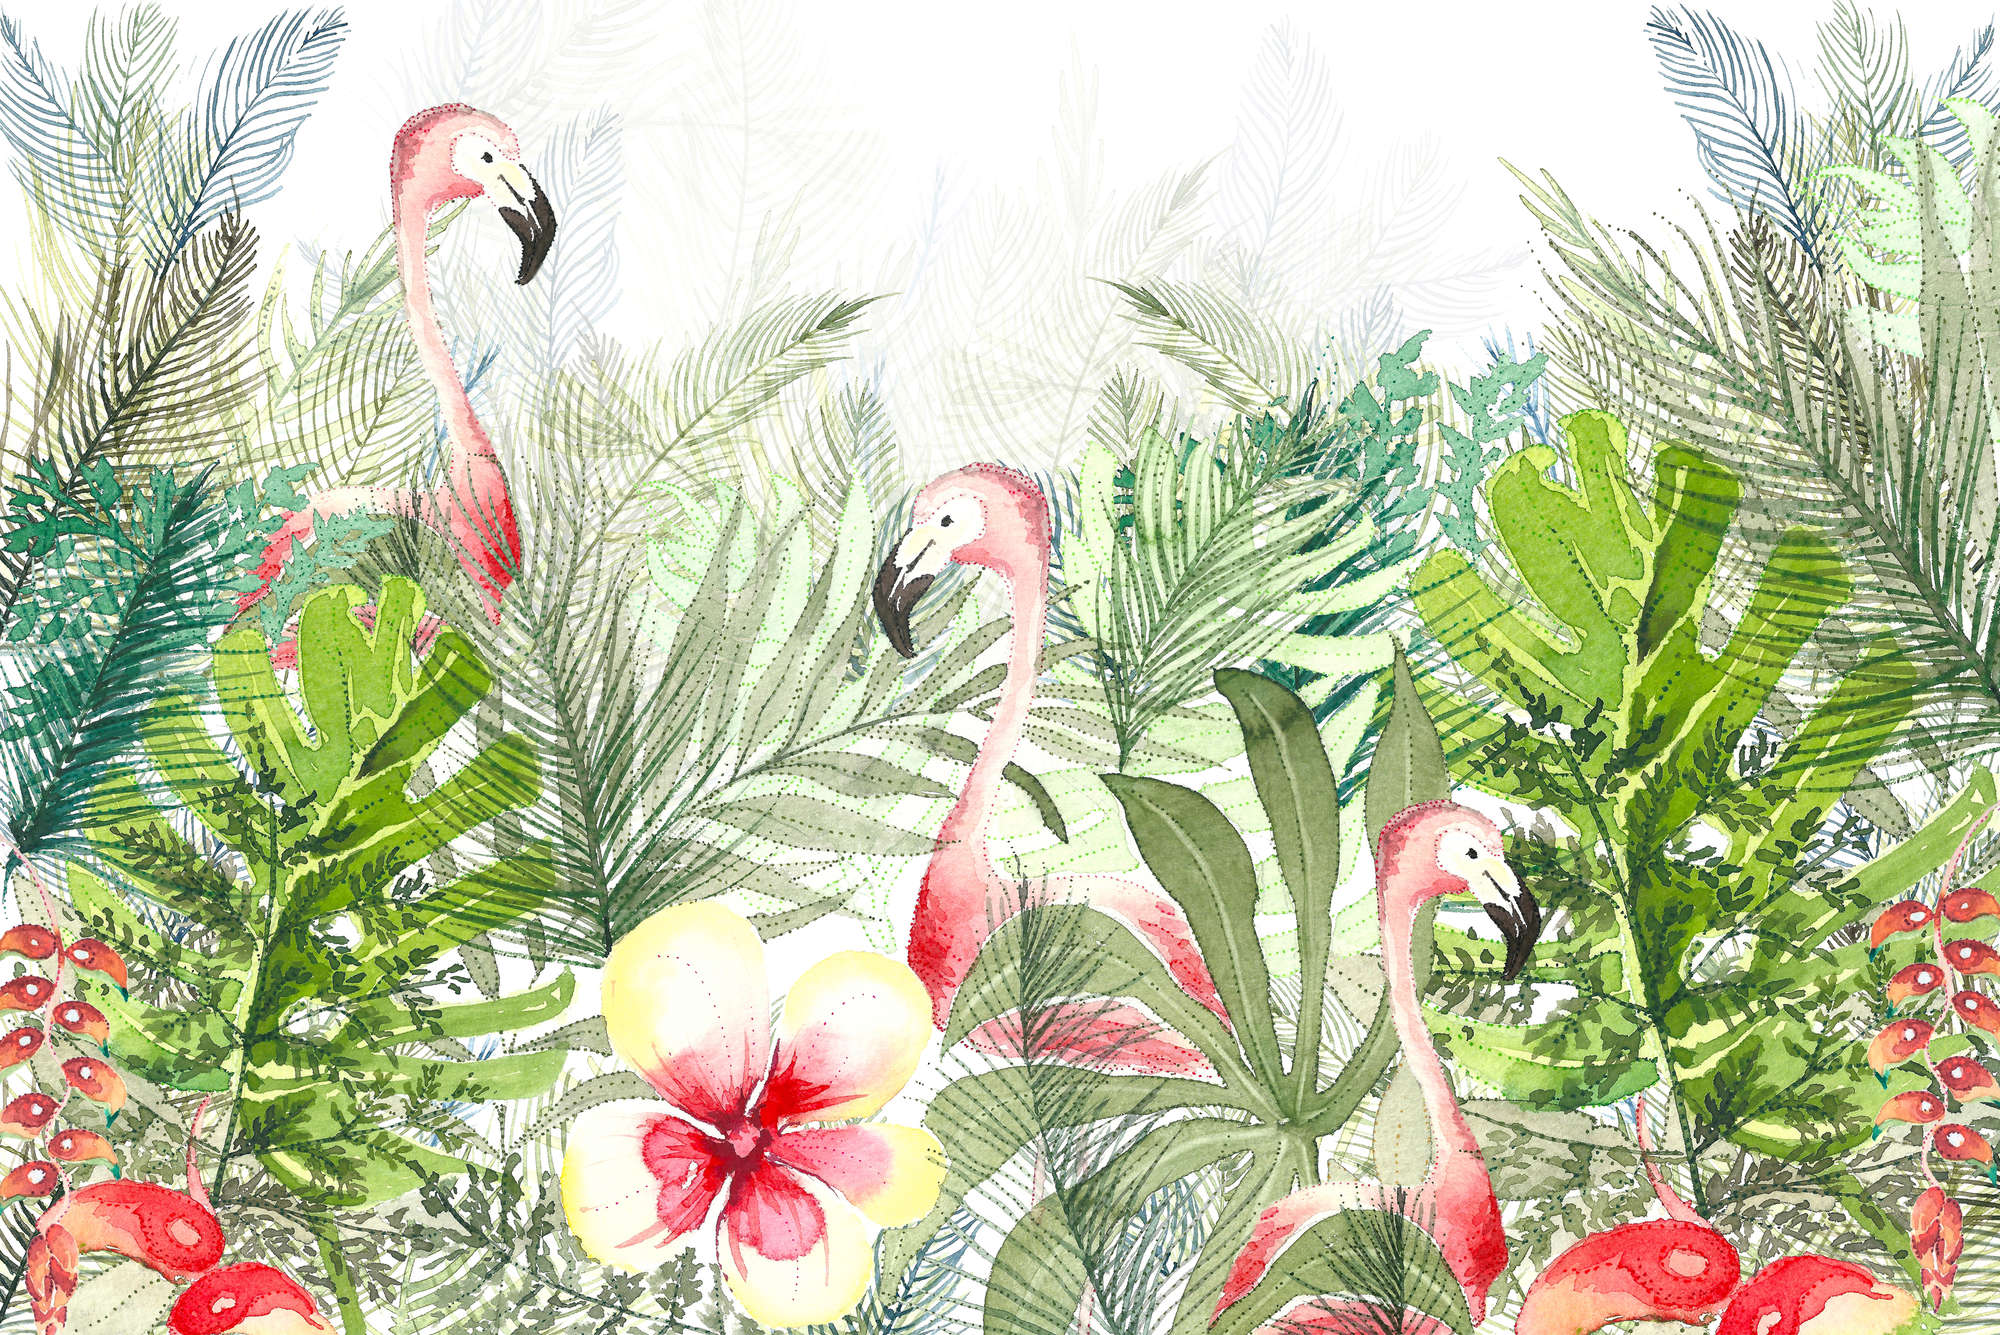             Papel pintado de acuarela Flamingo, hojas y flores sobre vellón liso mate
        